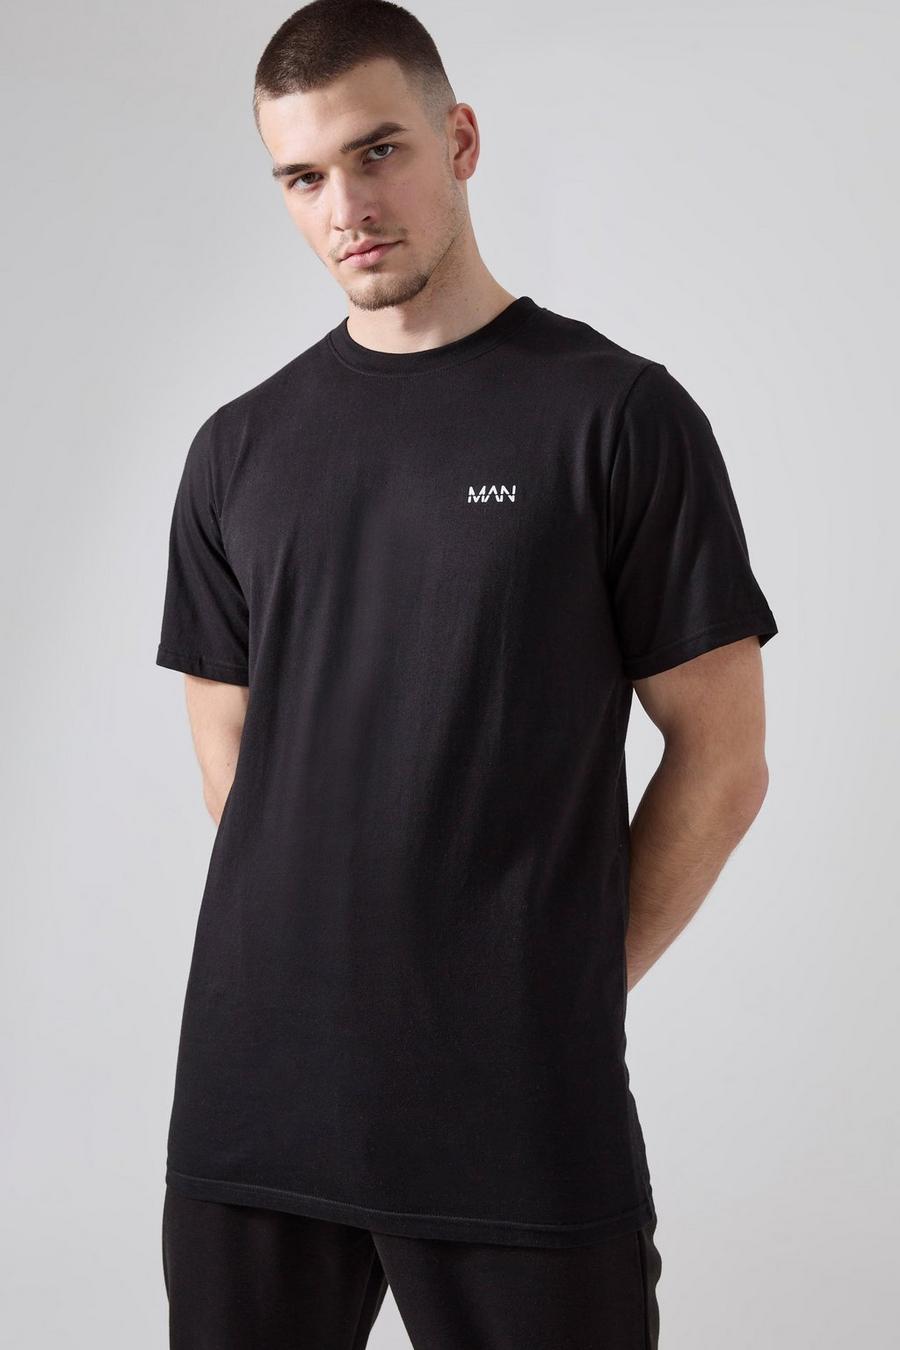 Black noir Tall Basic Man Active Fitness T-Shirt